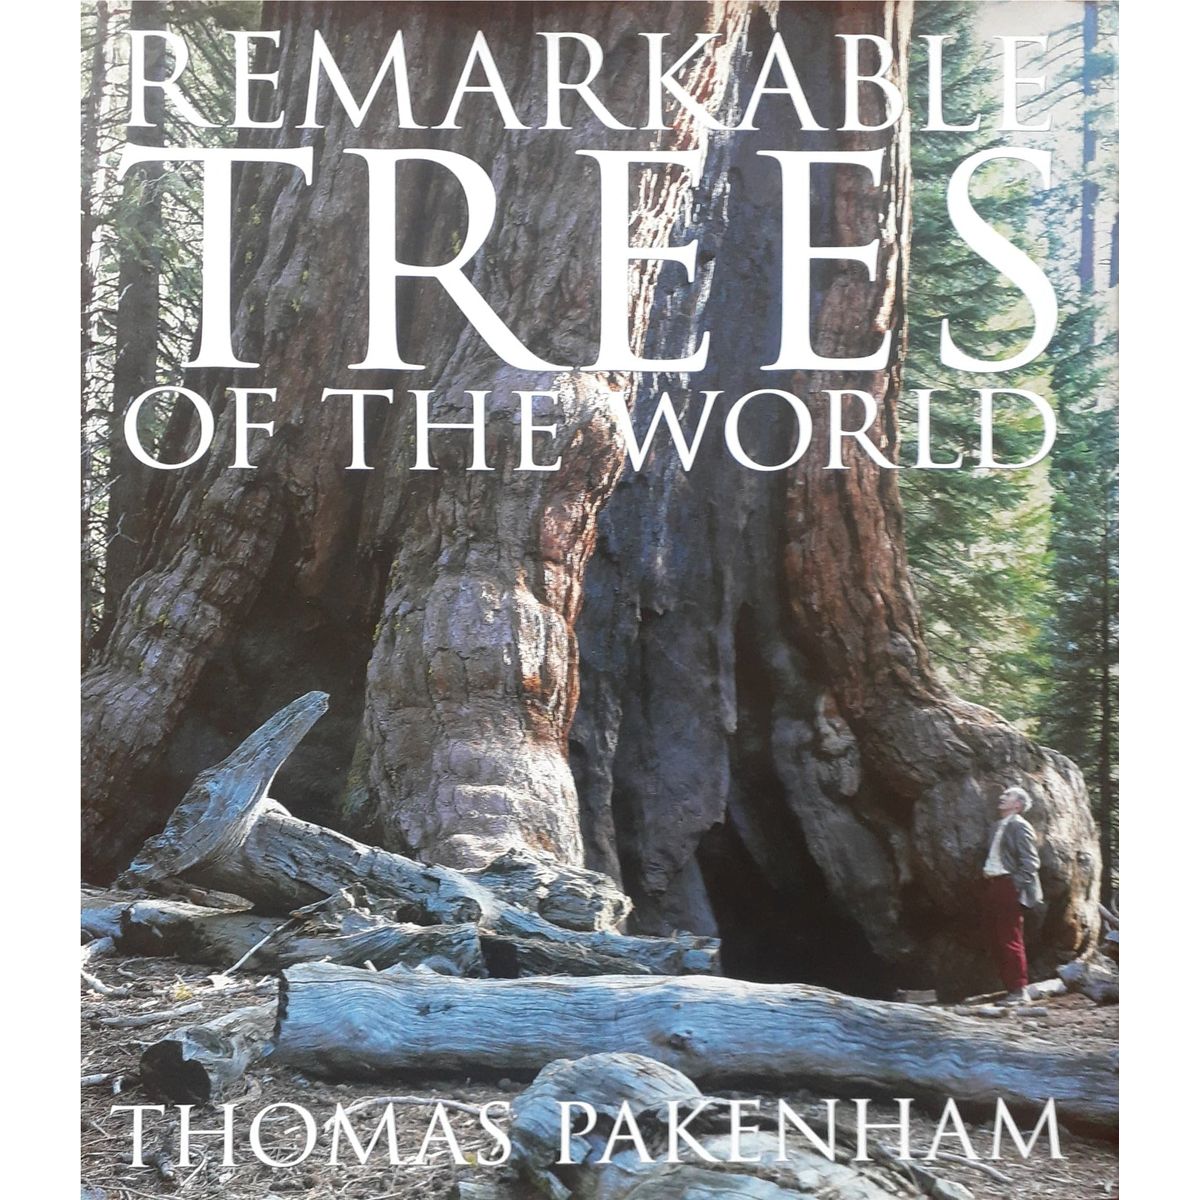 ISBN: 9781868421282 / 1868421287 - Remarkable Trees of the World by Thomas Pakenham [2002]